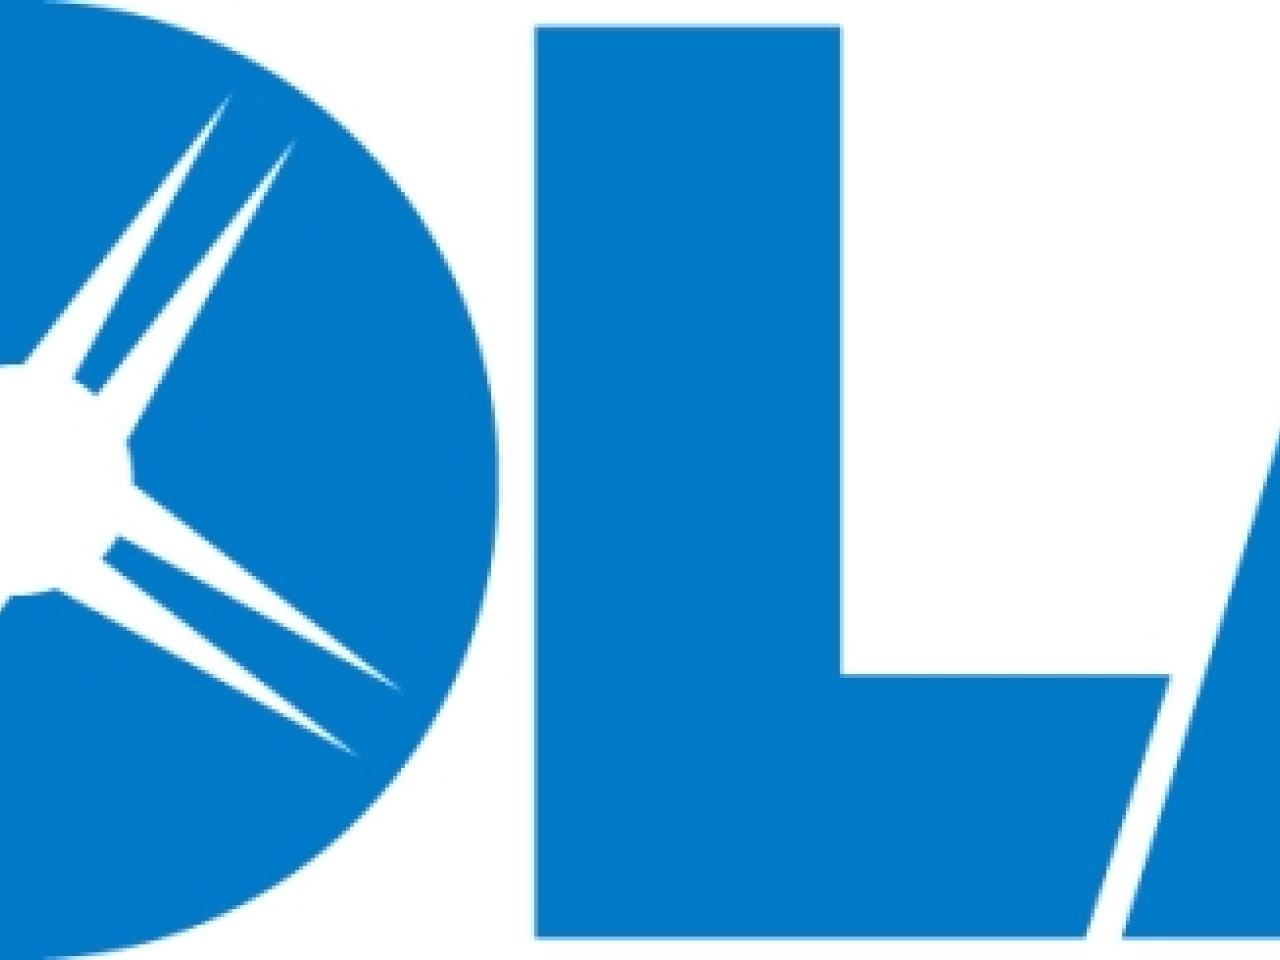 Ecolab Inc. logo